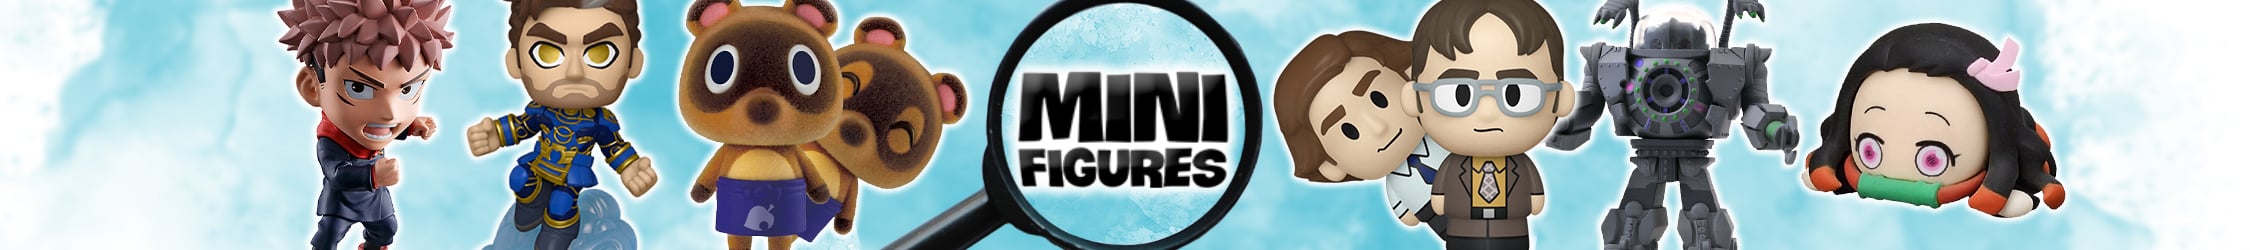 MiniFigures